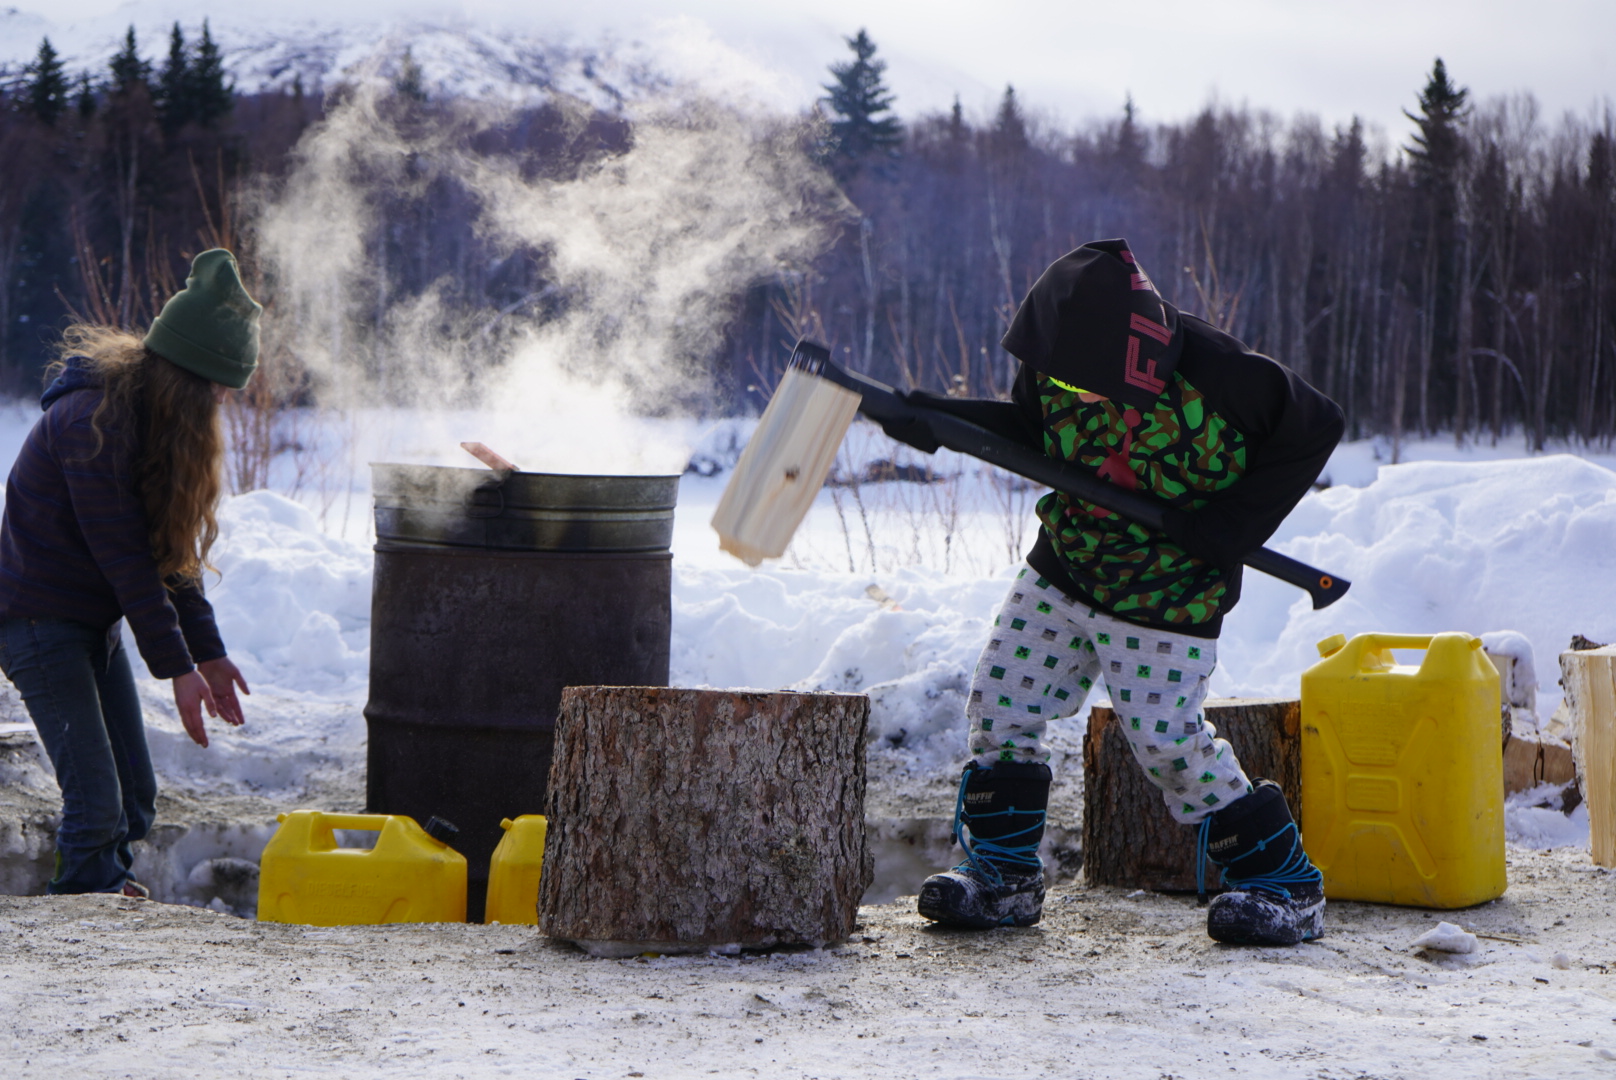 A kid chops wood in front of a burn barrel